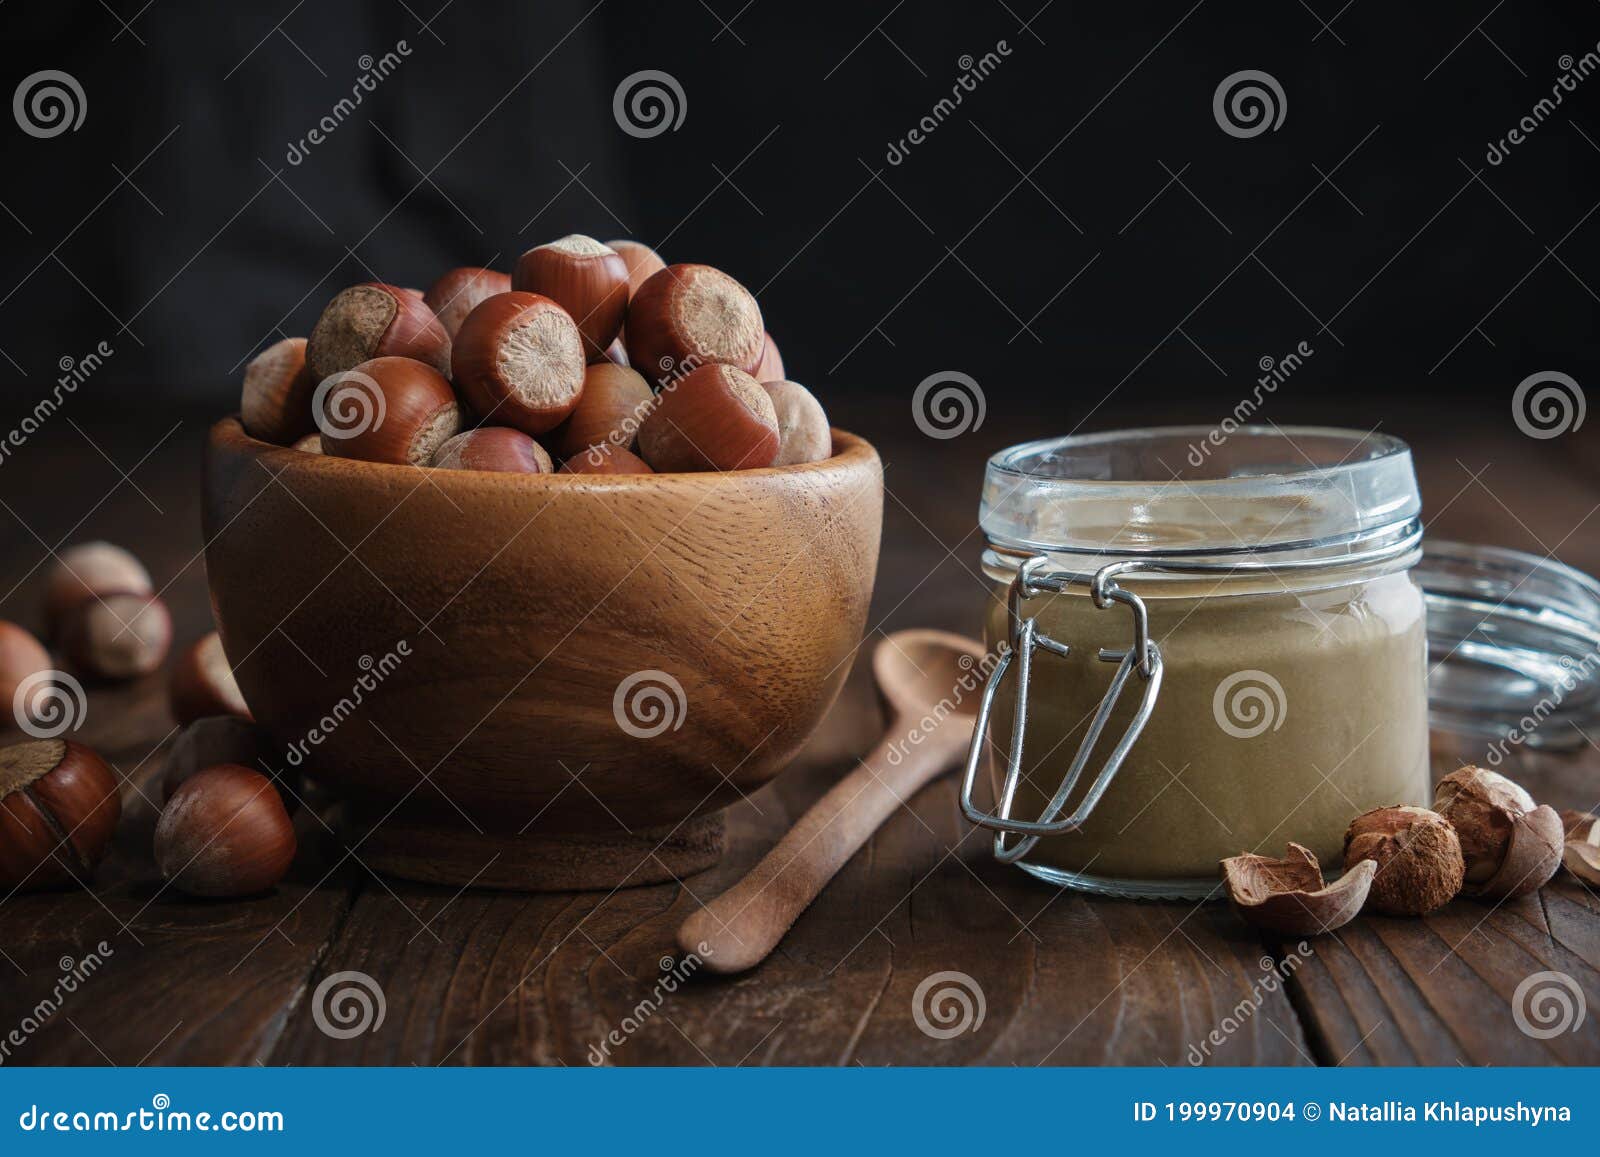 bowl of hazelnuts, glass jar of raw organic hazelnut butter or paste on kitchen table